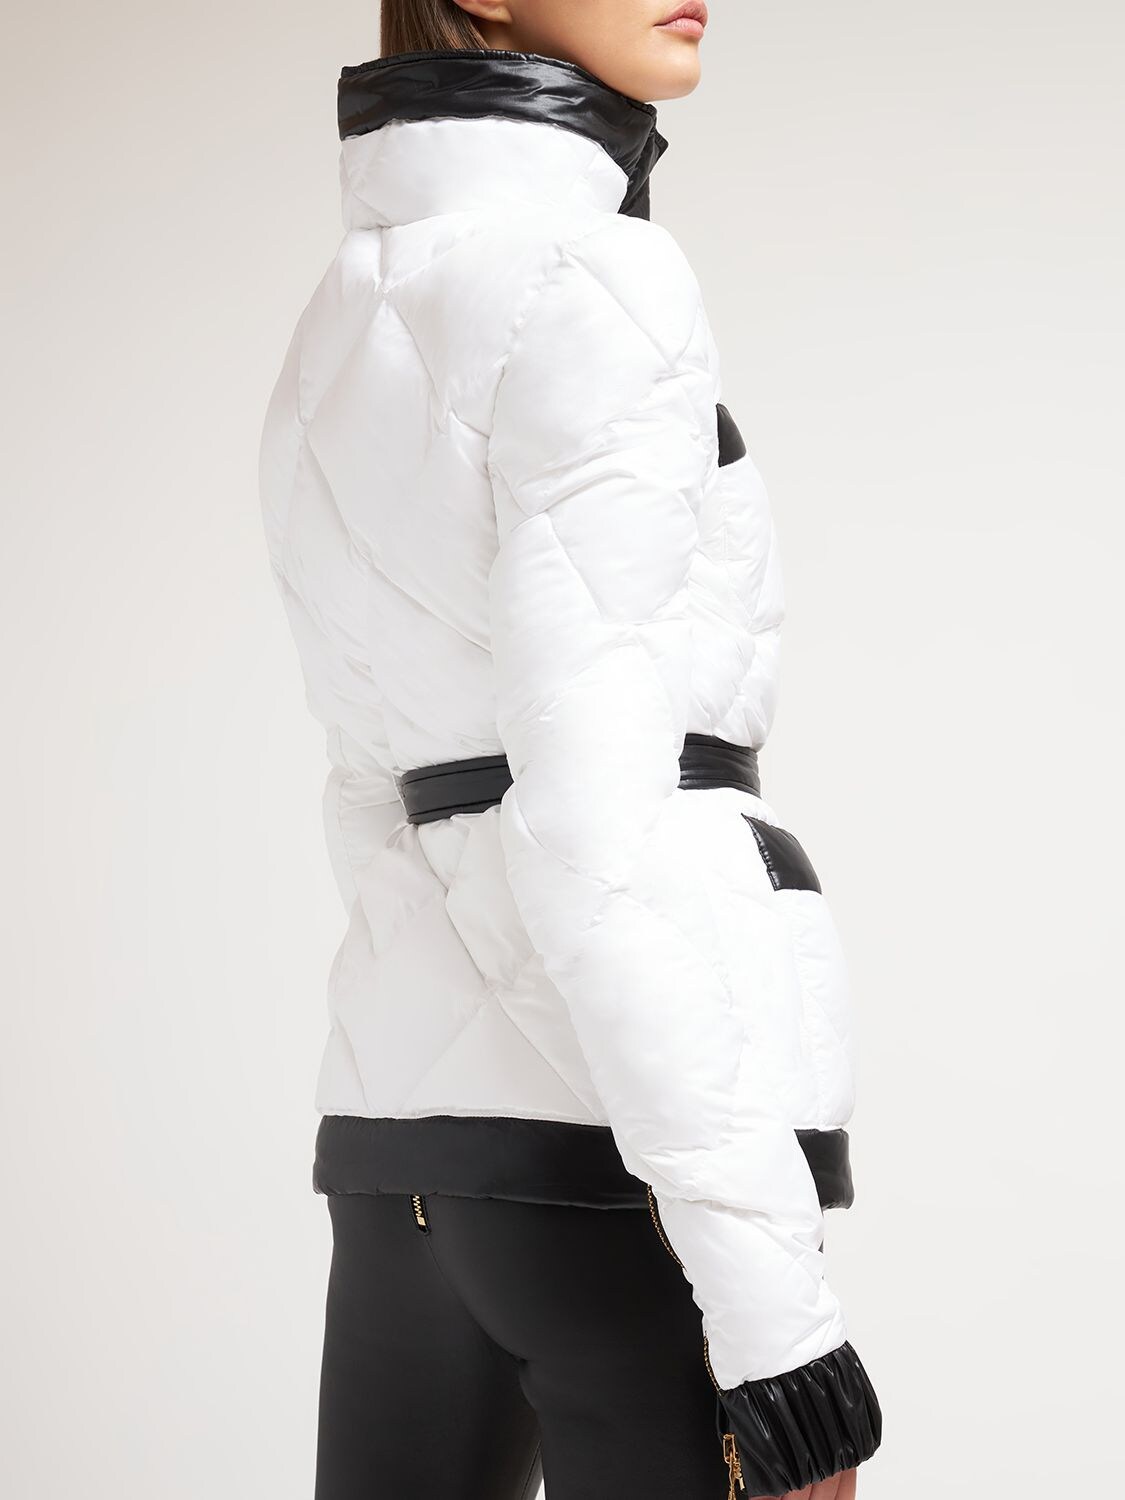 Balmain Monochrome Quilted Satin-shell In White/black | ModeSens